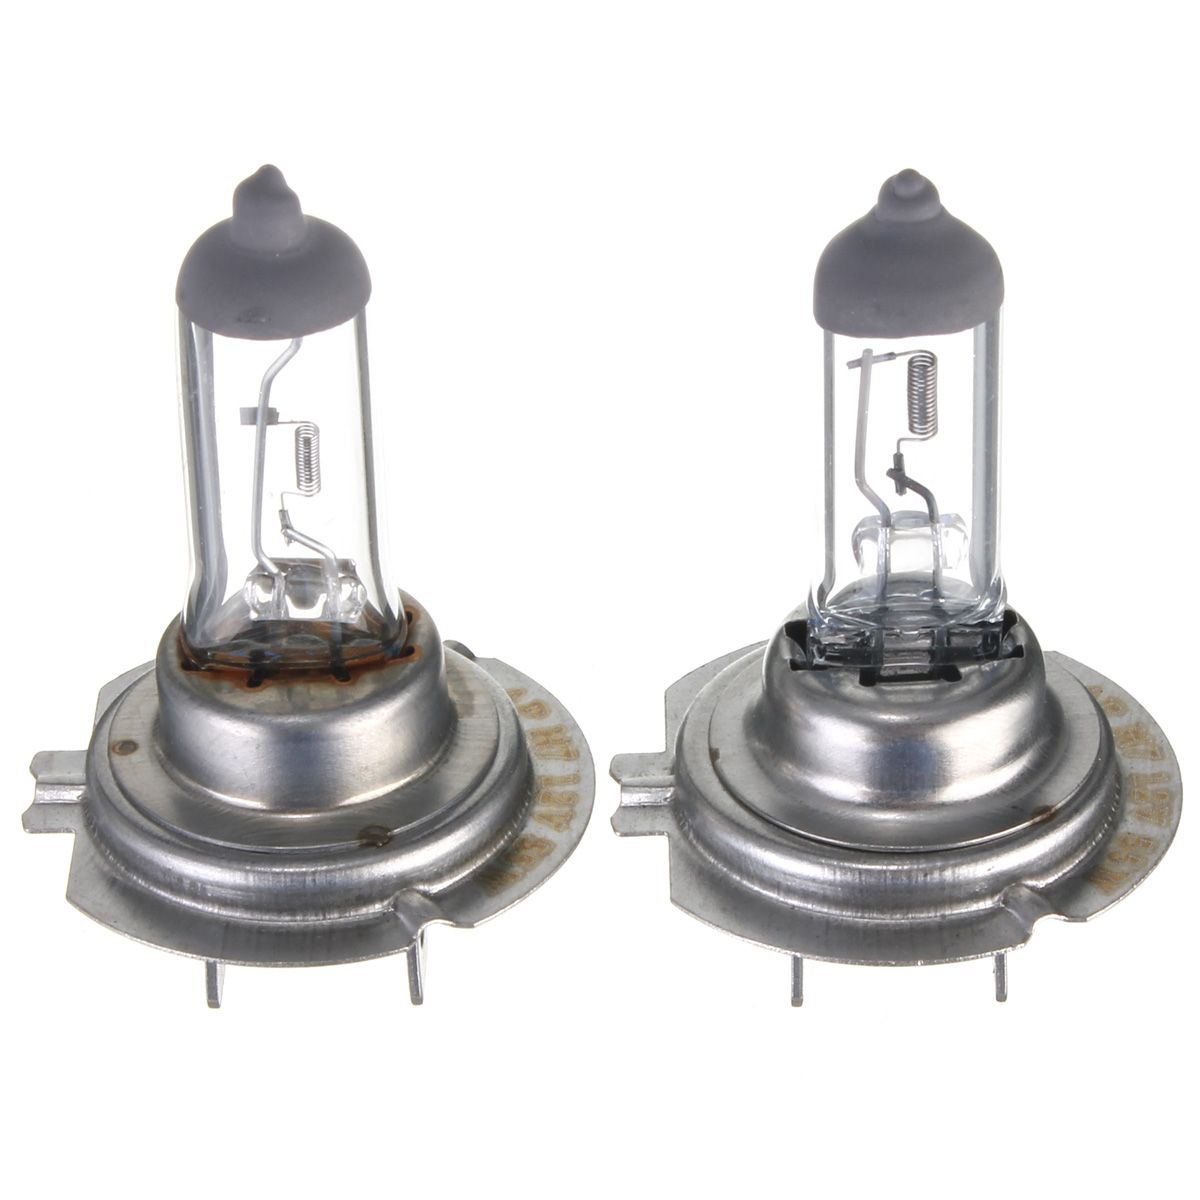 2Pcs-12V-55W-H7-Halogen-Car-Fog-Light-Bulb-Headlamp-Clear-Glass-Bulbs-Lamp-Super-Bright-White-1723403